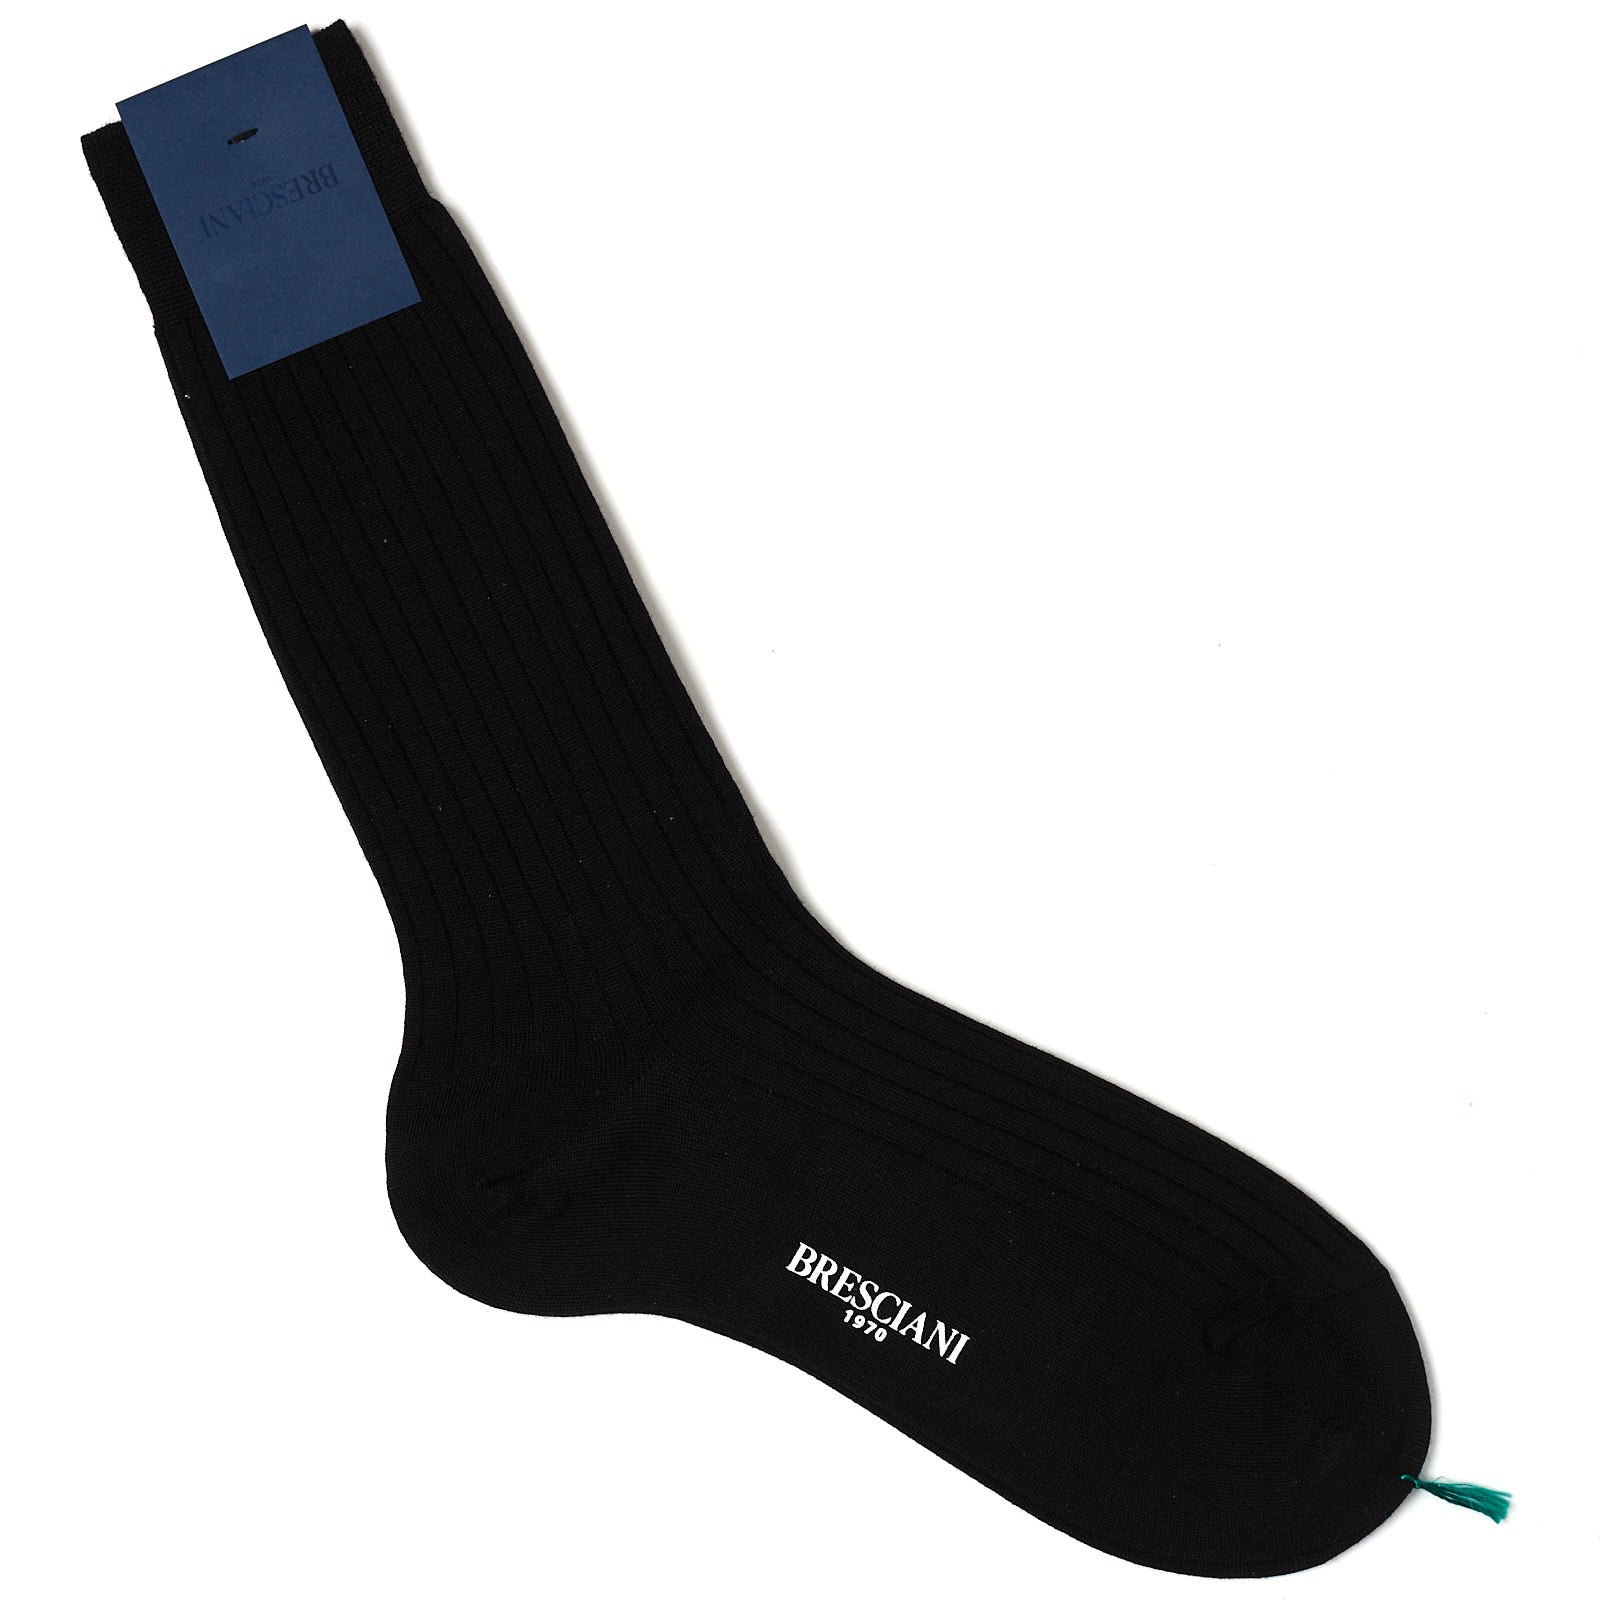 BRESCIANI Extrafine Wool Black Mid Calf Length Socks US M-L